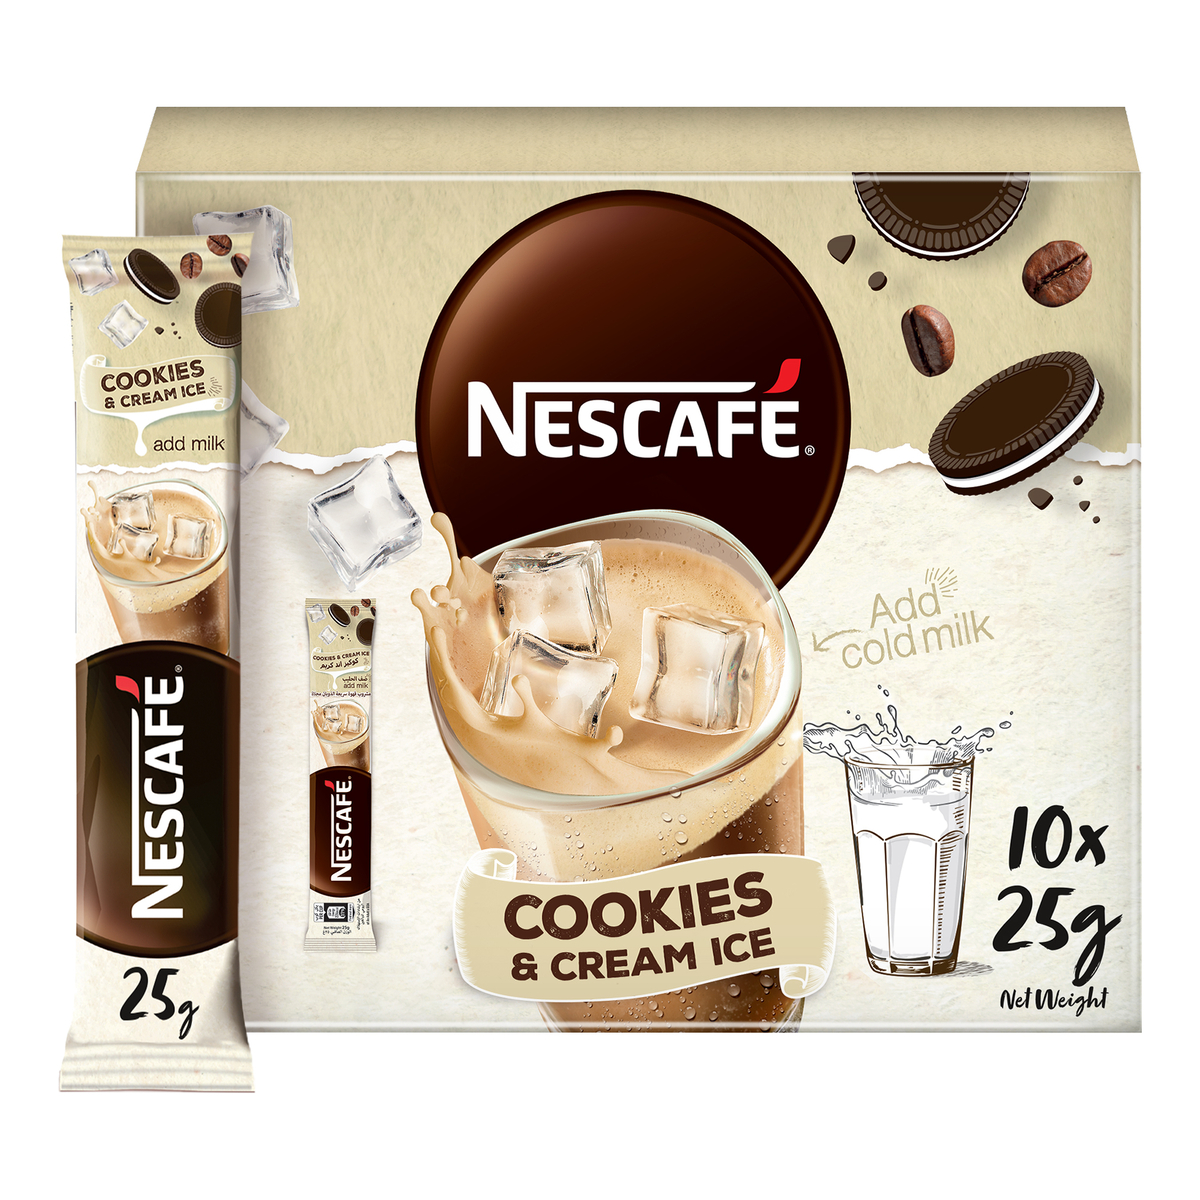 Discover Nescafe Iced Coffee Mocha Online